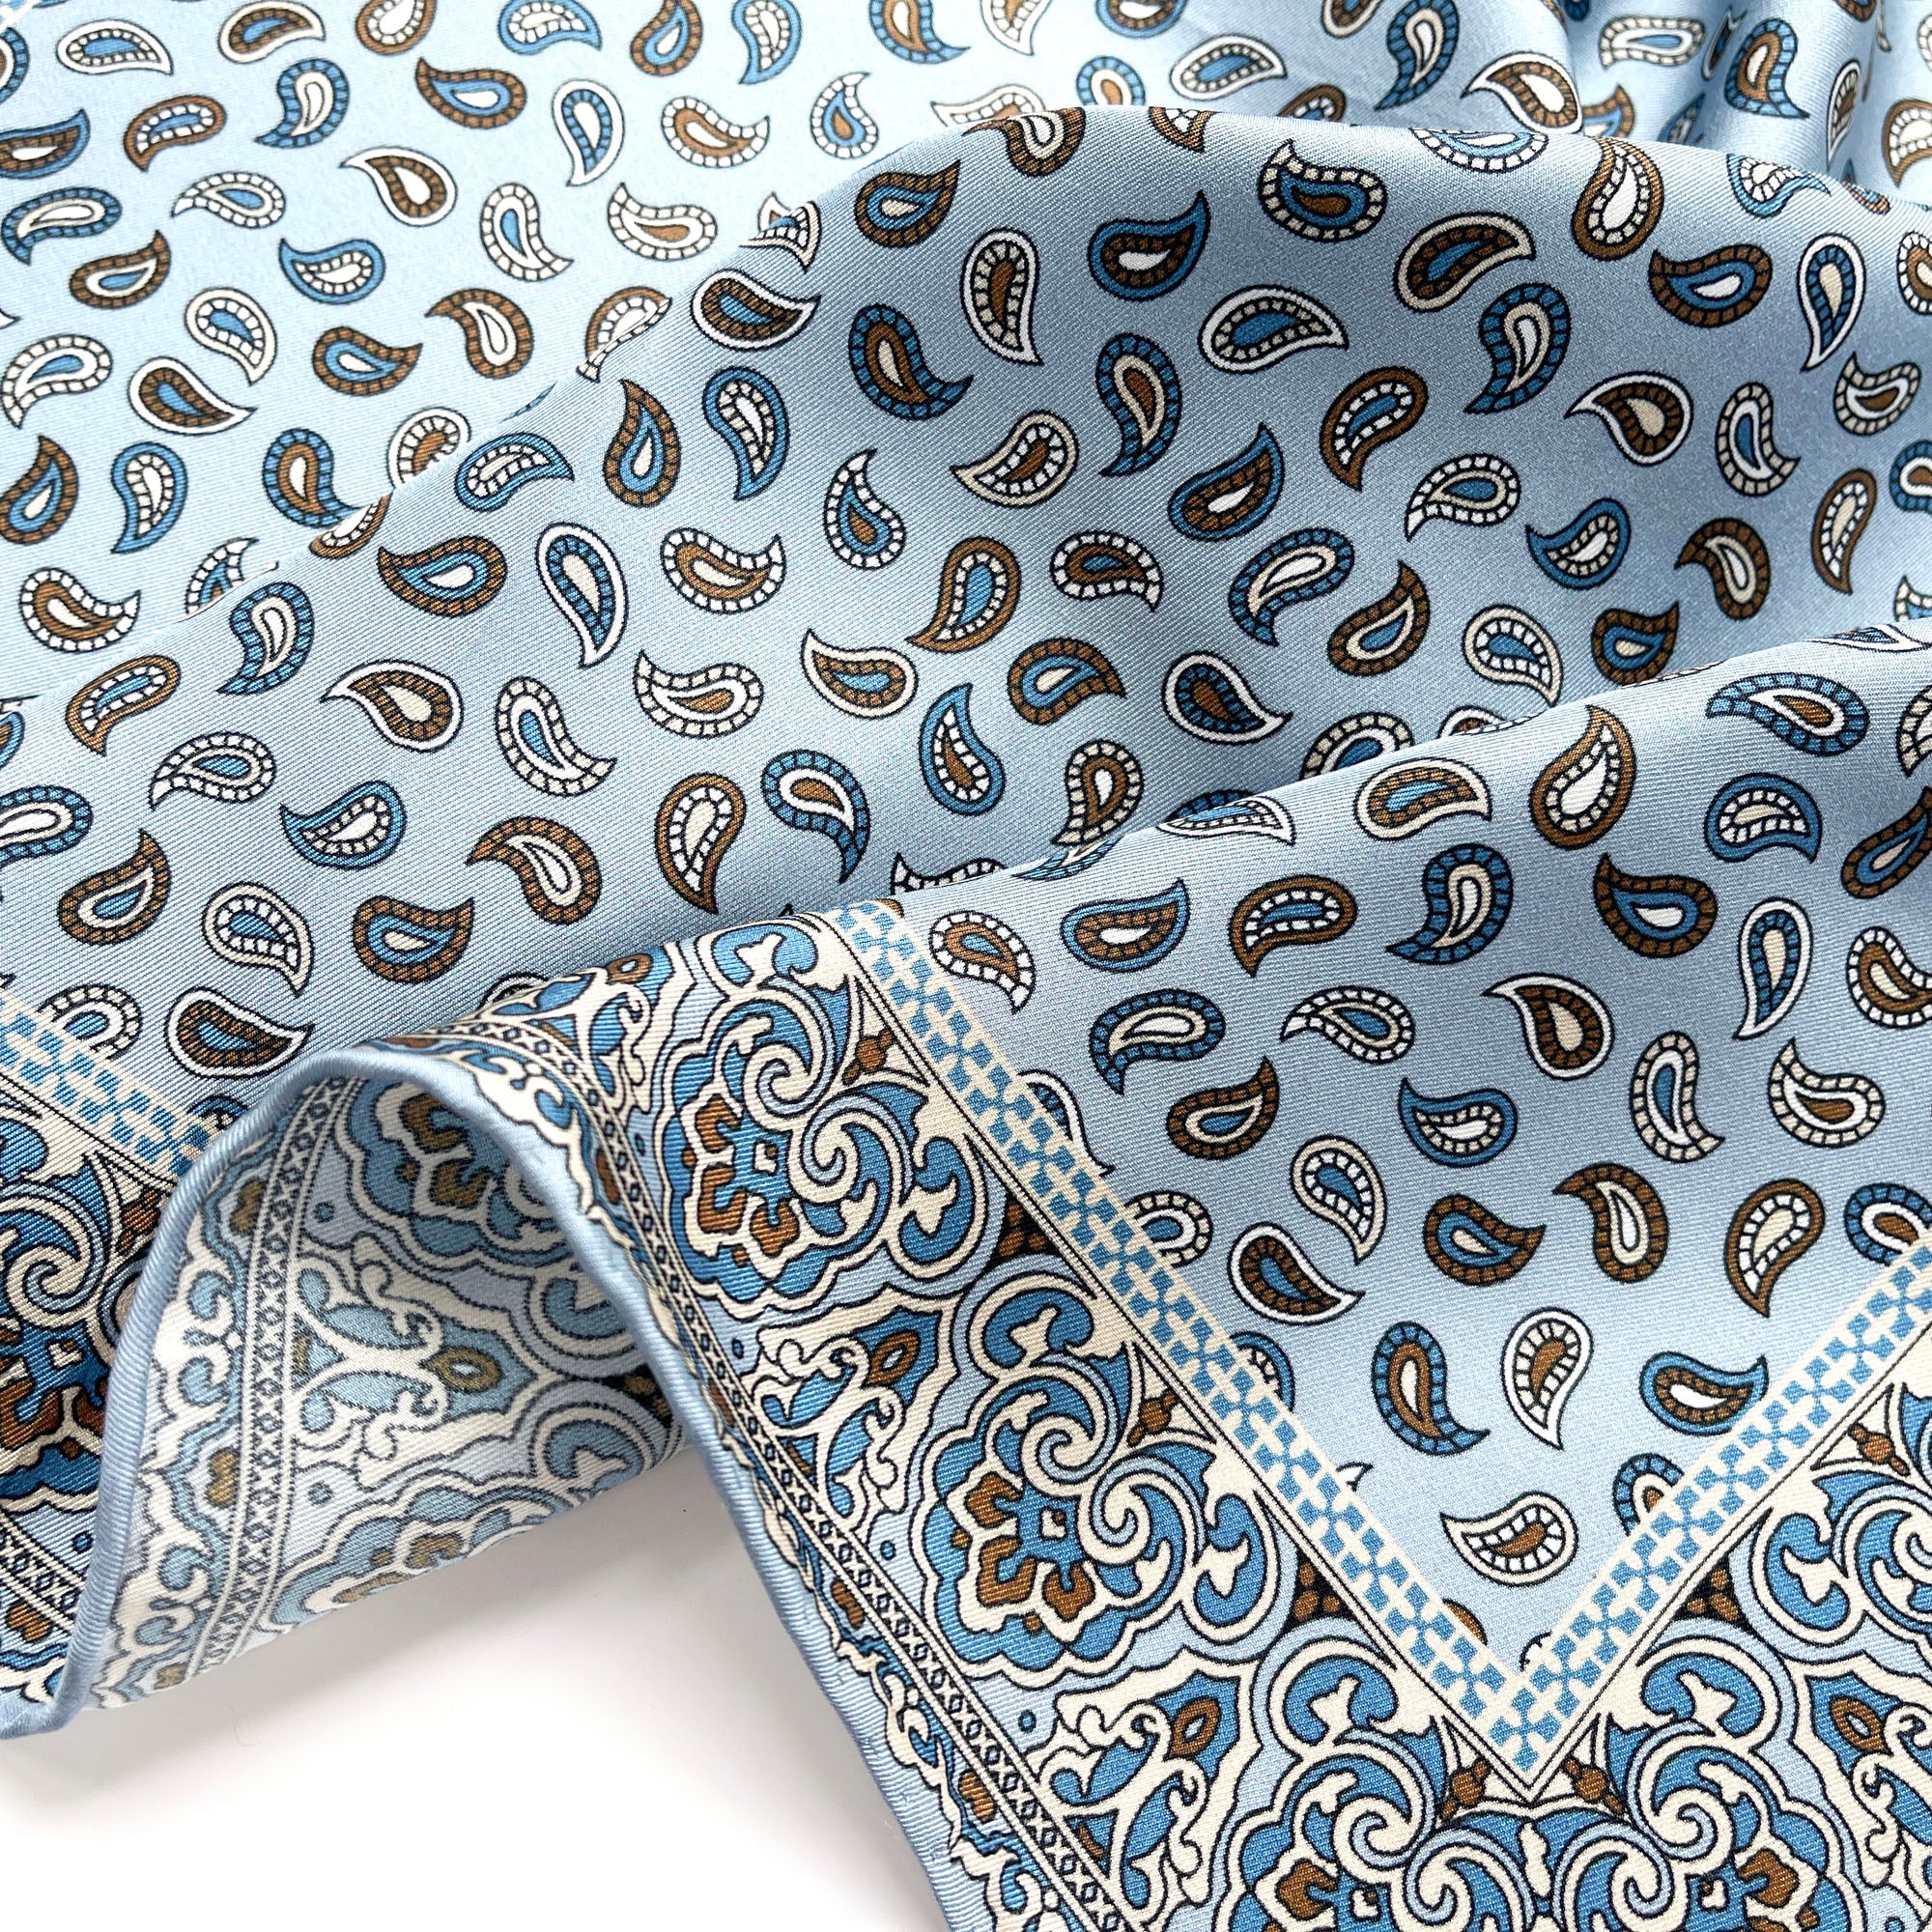 a paisley pattern silk neckerchief/bandana in sky blue